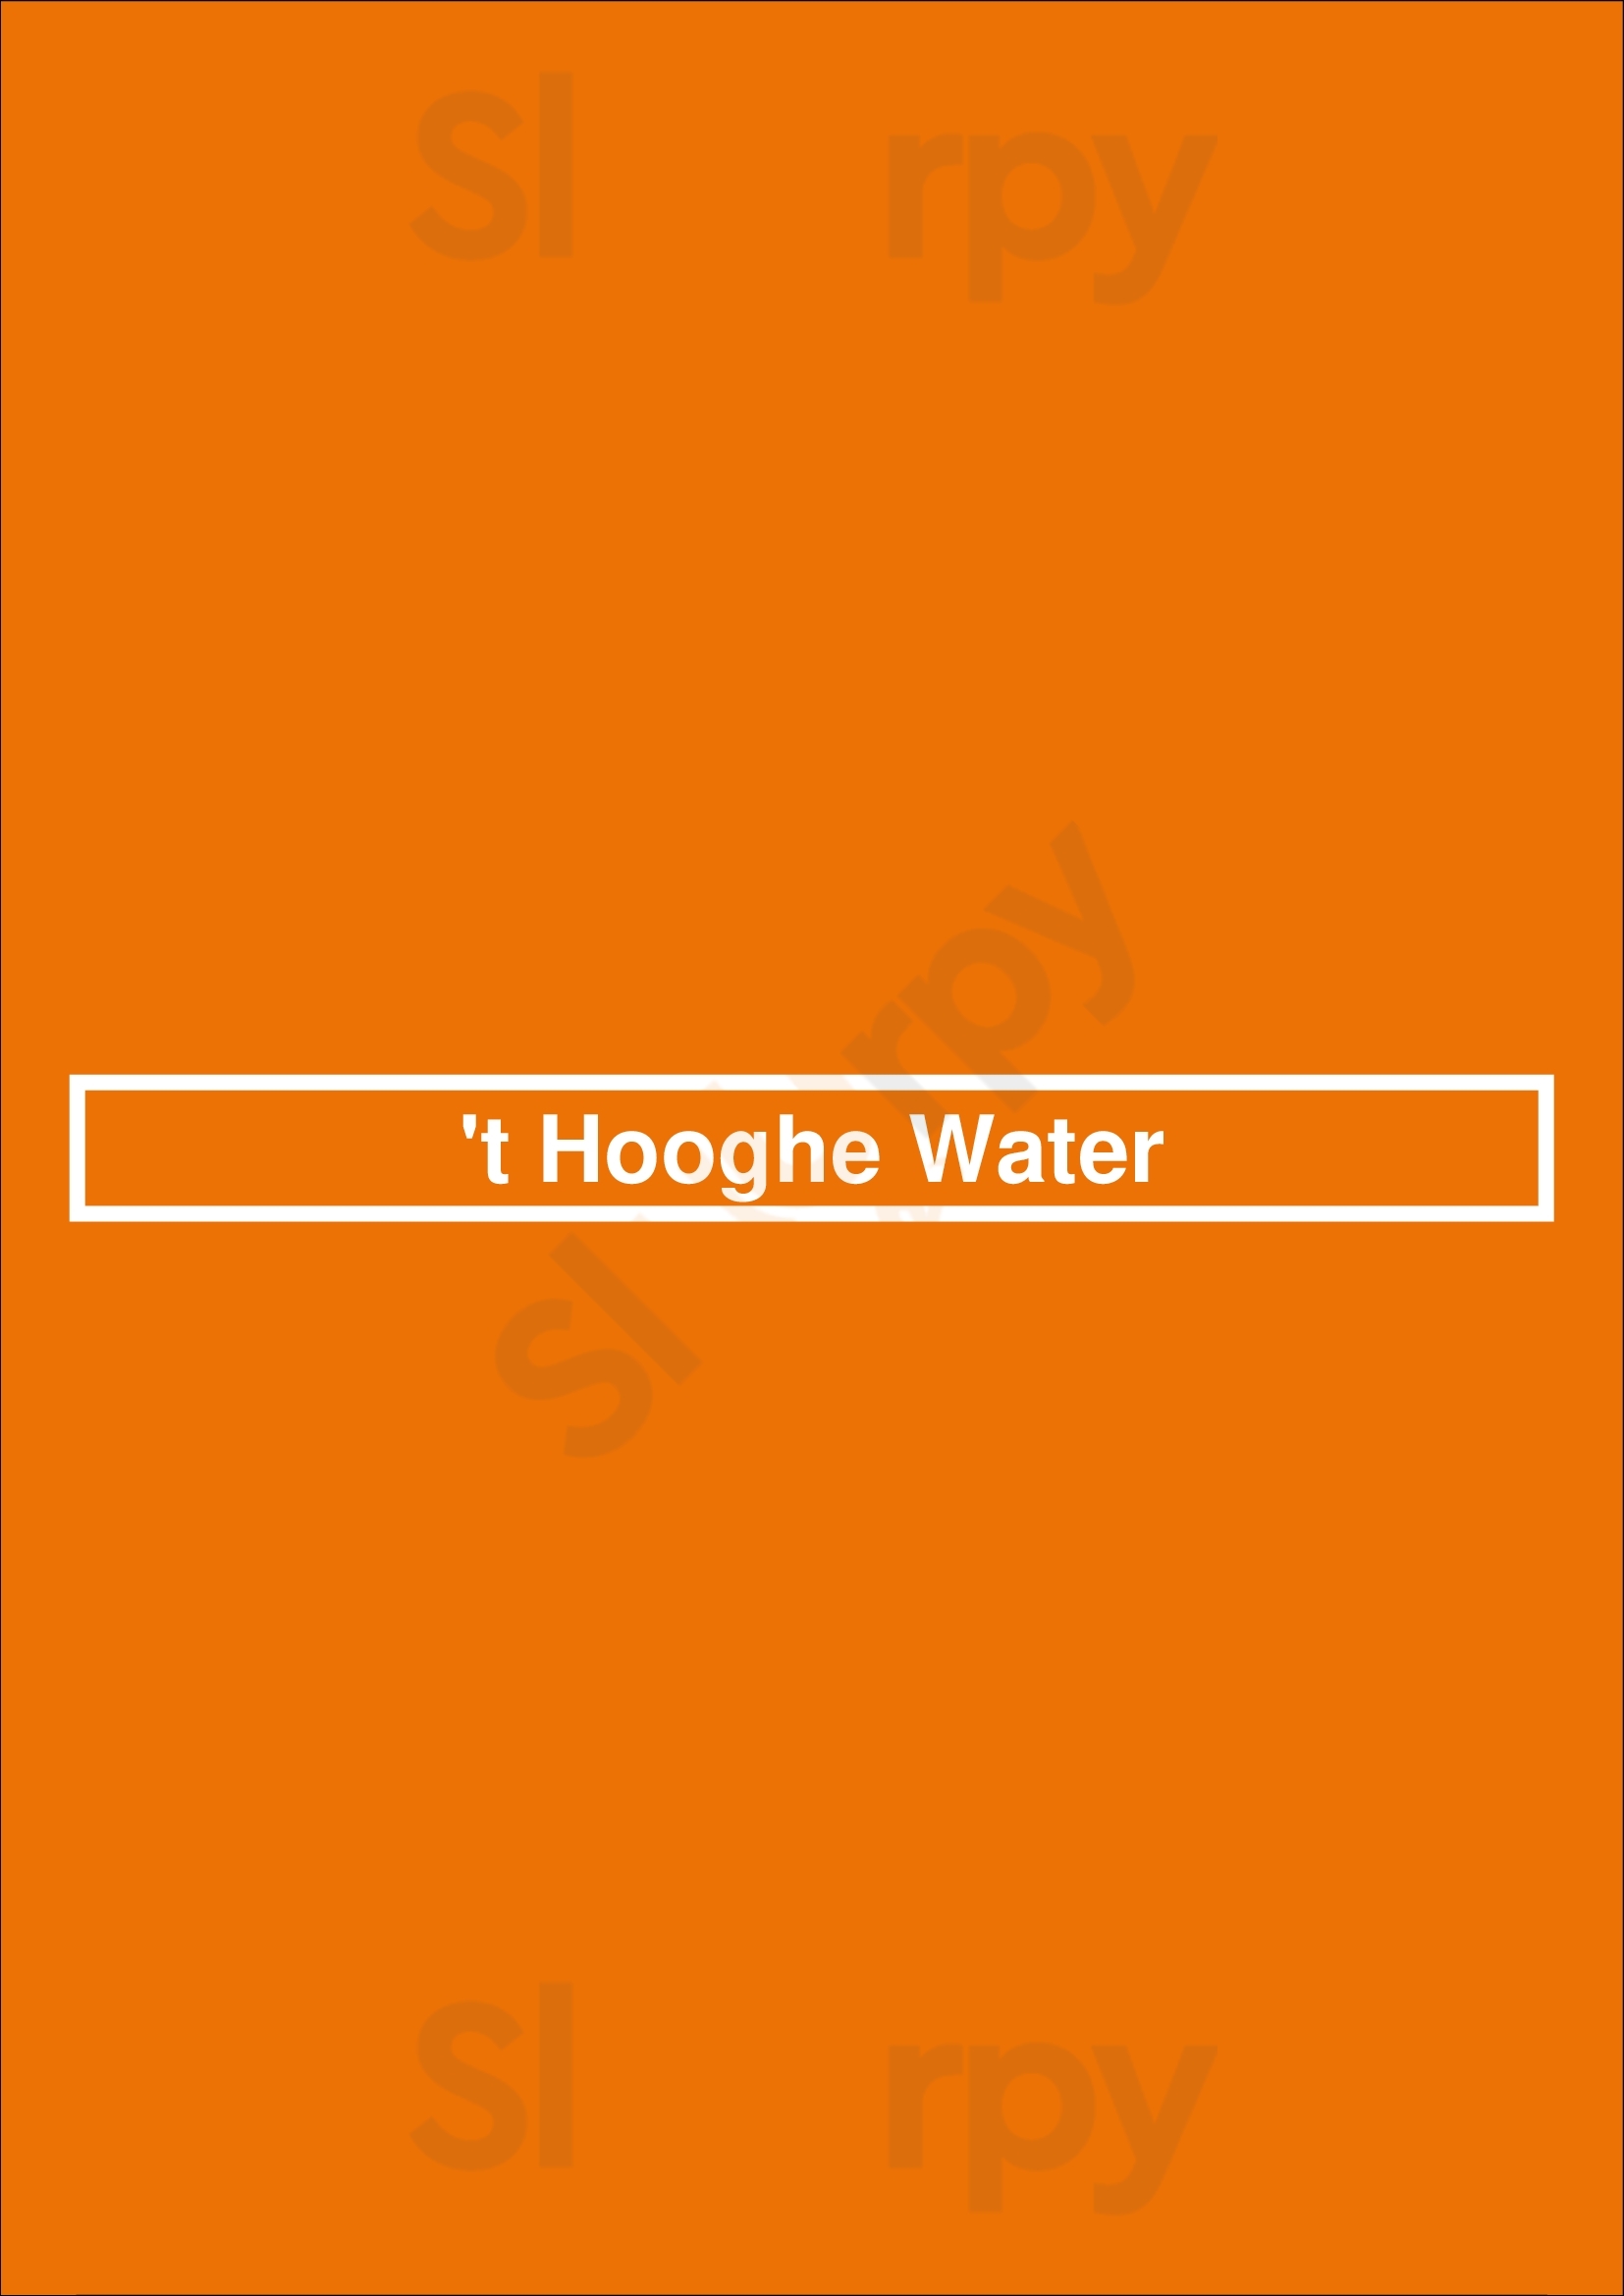 't Hooghe Water Capelle aan den IJssel Menu - 1